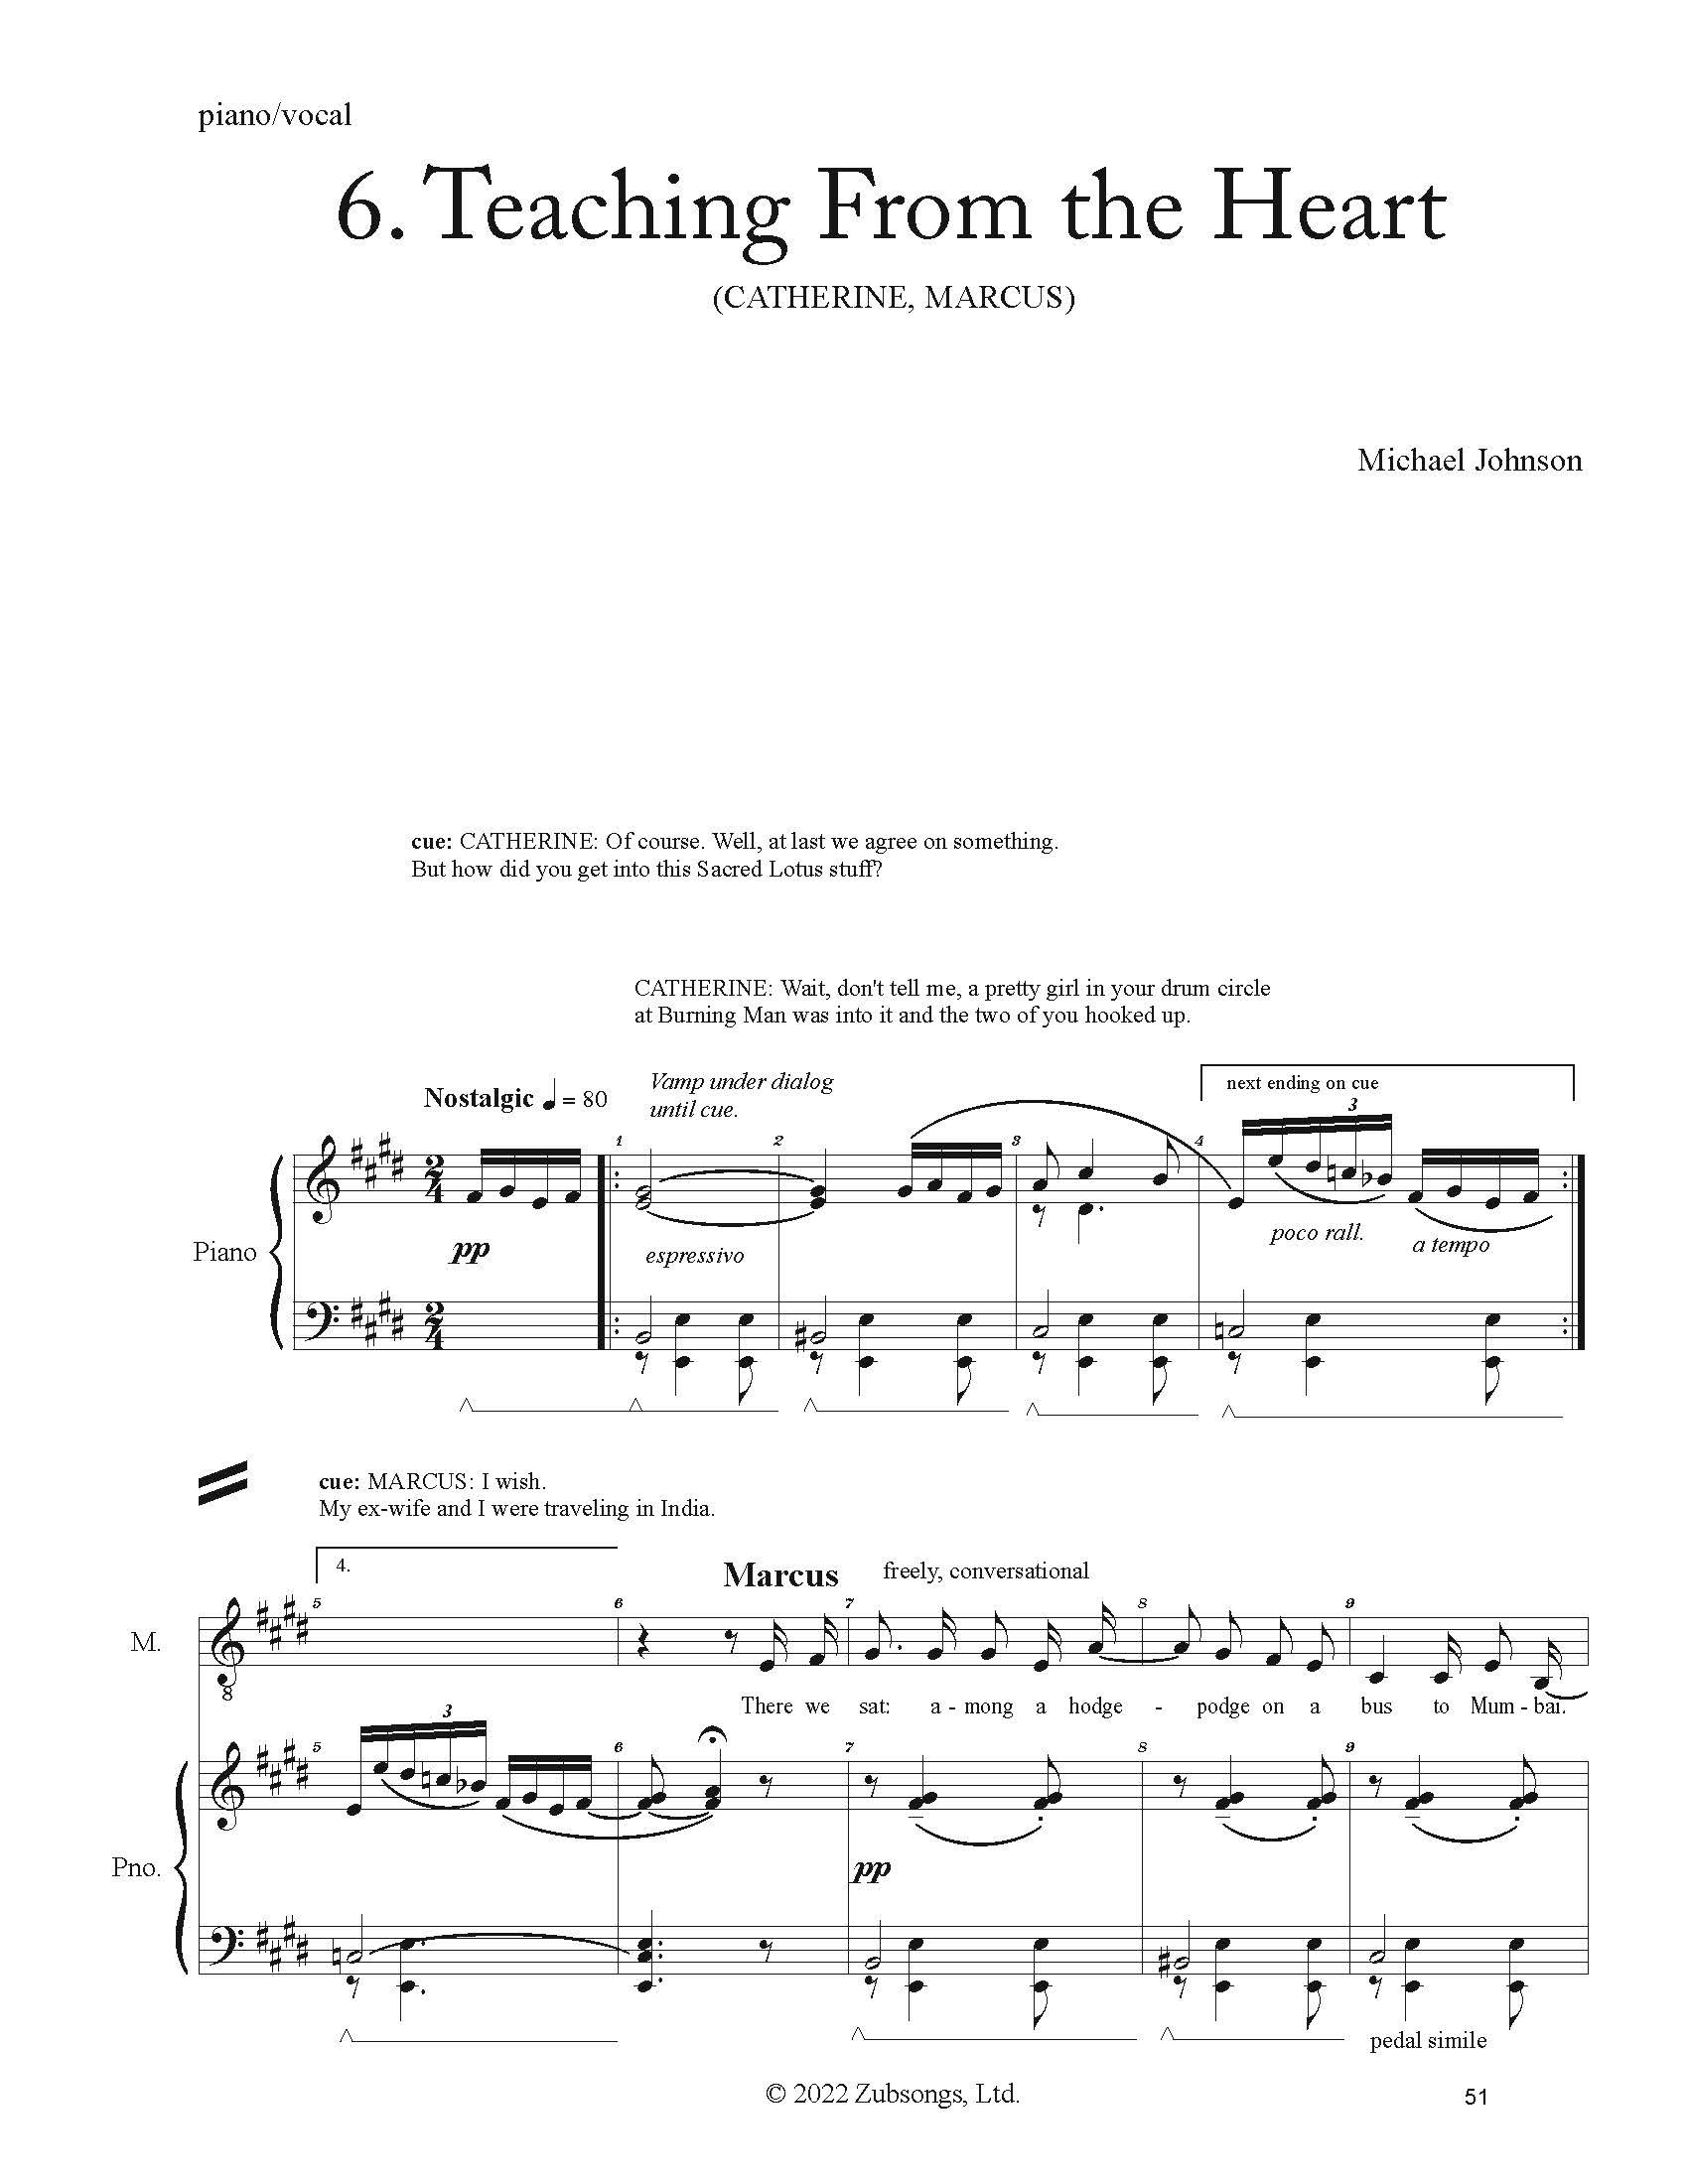 FULL PIANO VOCAL SCORE DRAFT 1 - Score_Page_051.jpg